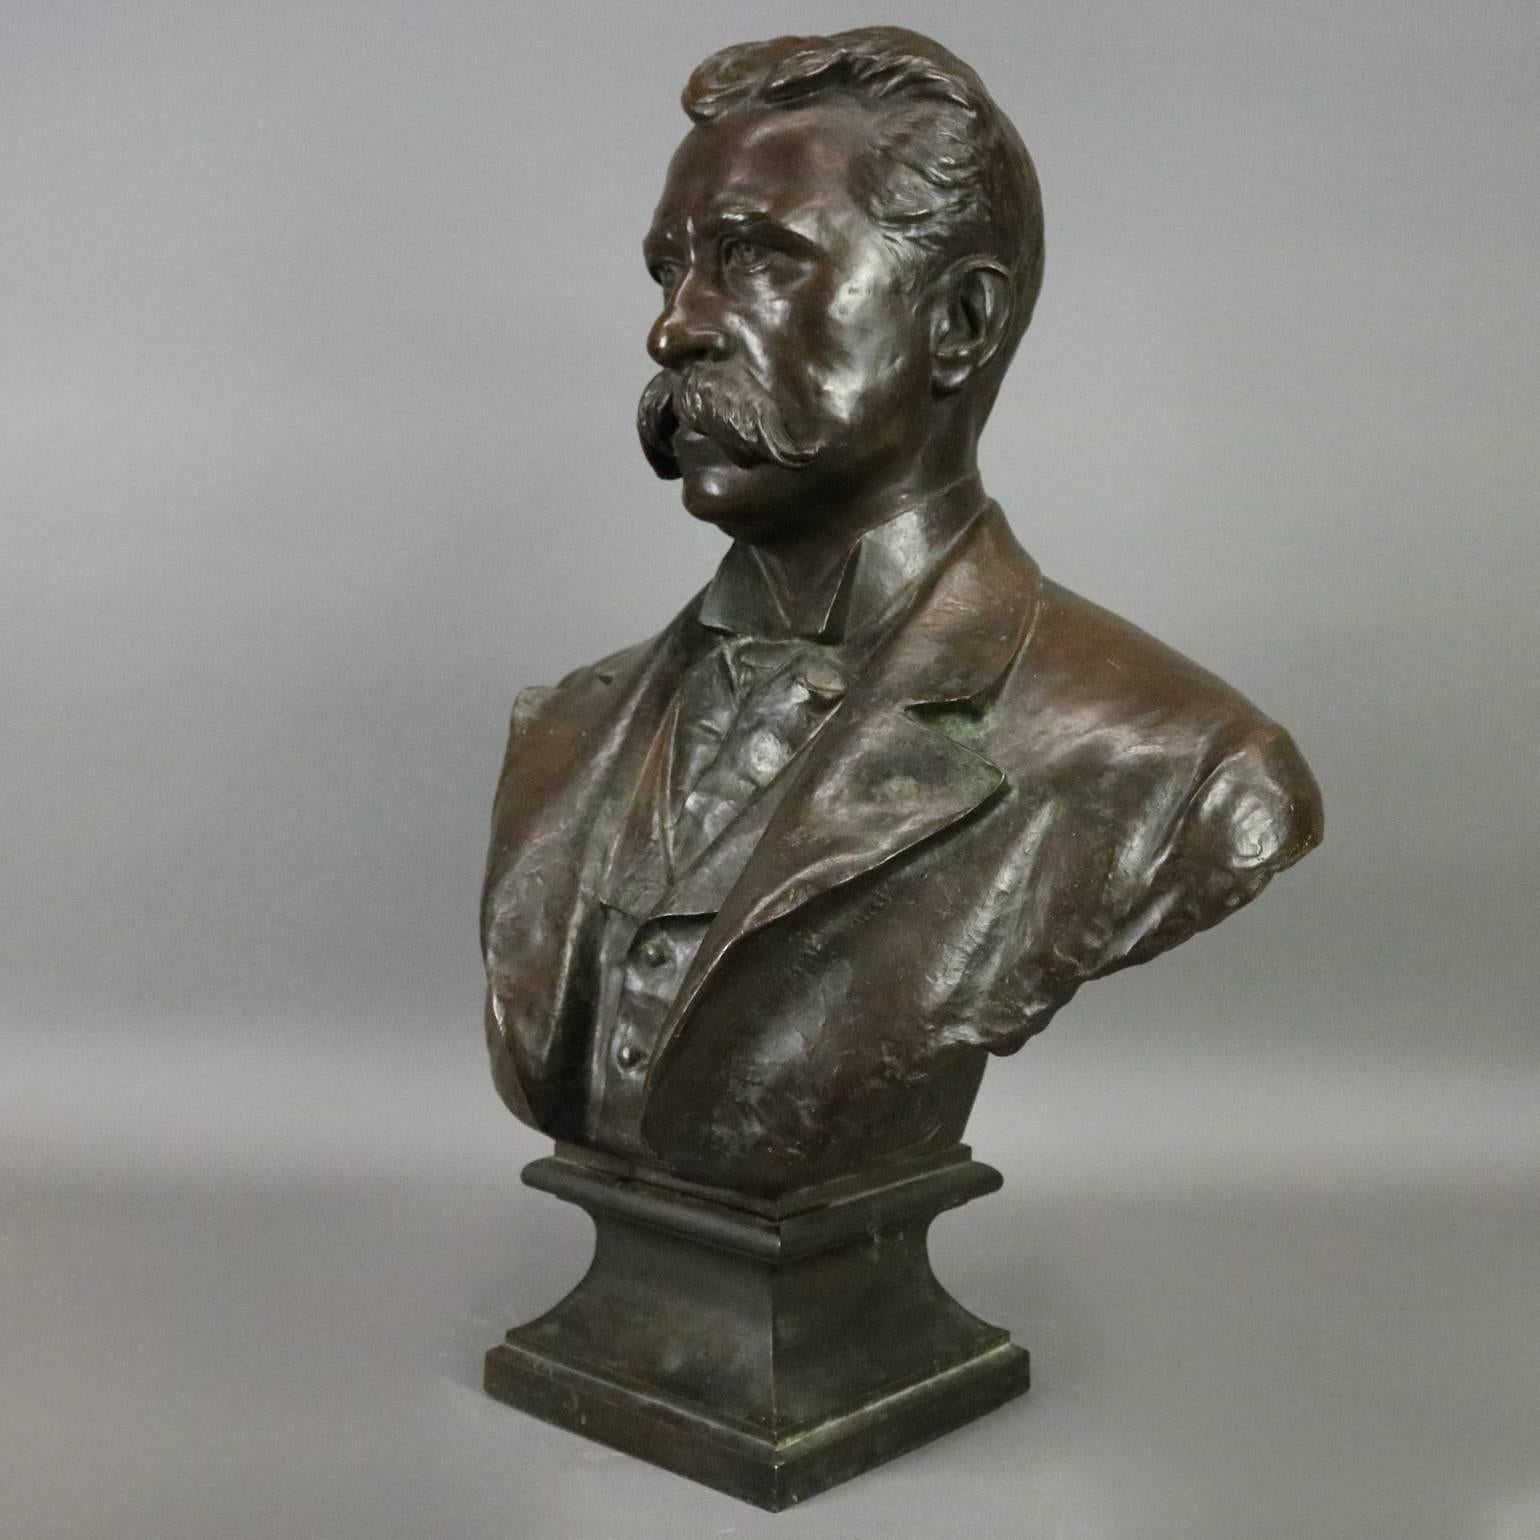 Antique 3/4 cast bronze bust of President Theodore Roosevelt signed B. Feinberg, New York '90, Bernanowitch Hirsch Feinberg (Russian), crisp casting and excellent patina, 1890

Measures: 29" H x 22" W x 10" D, 8" x 8.25"